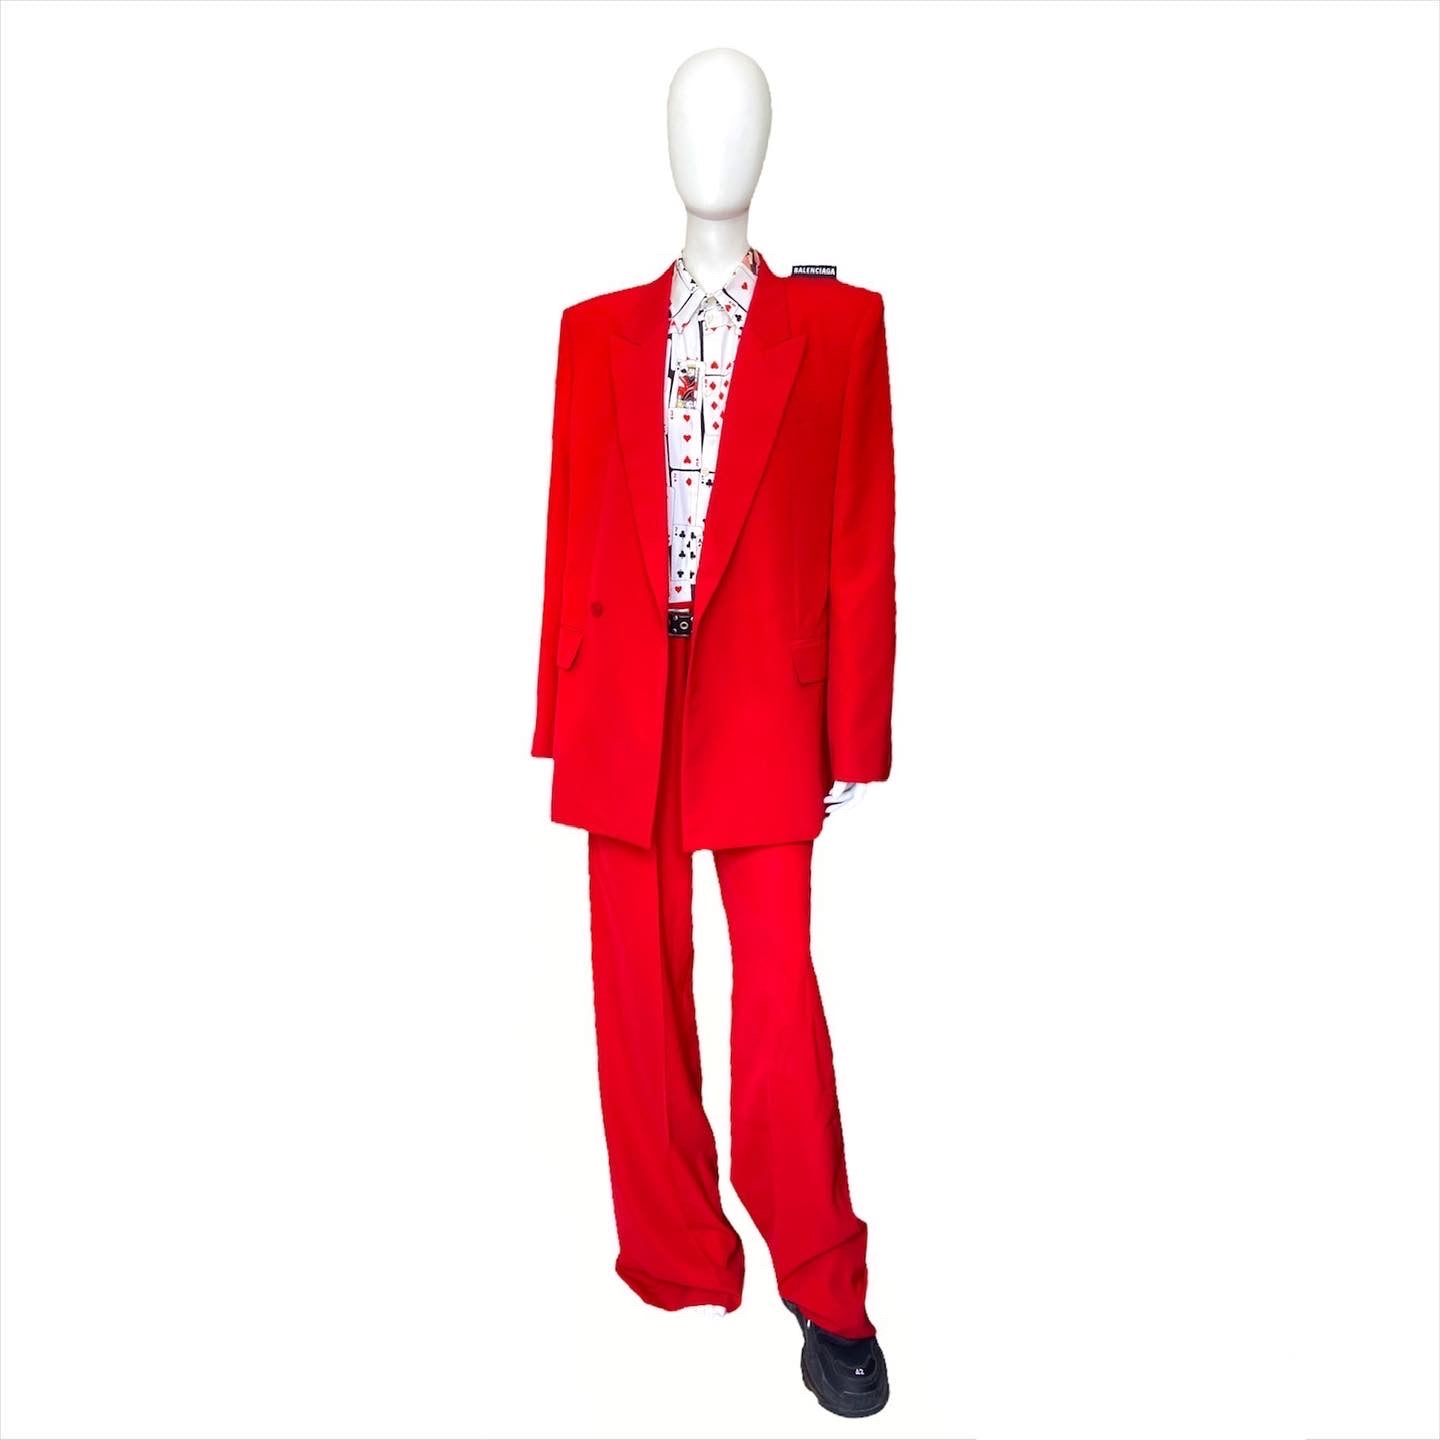 Balenciaga Bwnt ss19 runway set red 80s boxy shoulder blazer pants suit set 44